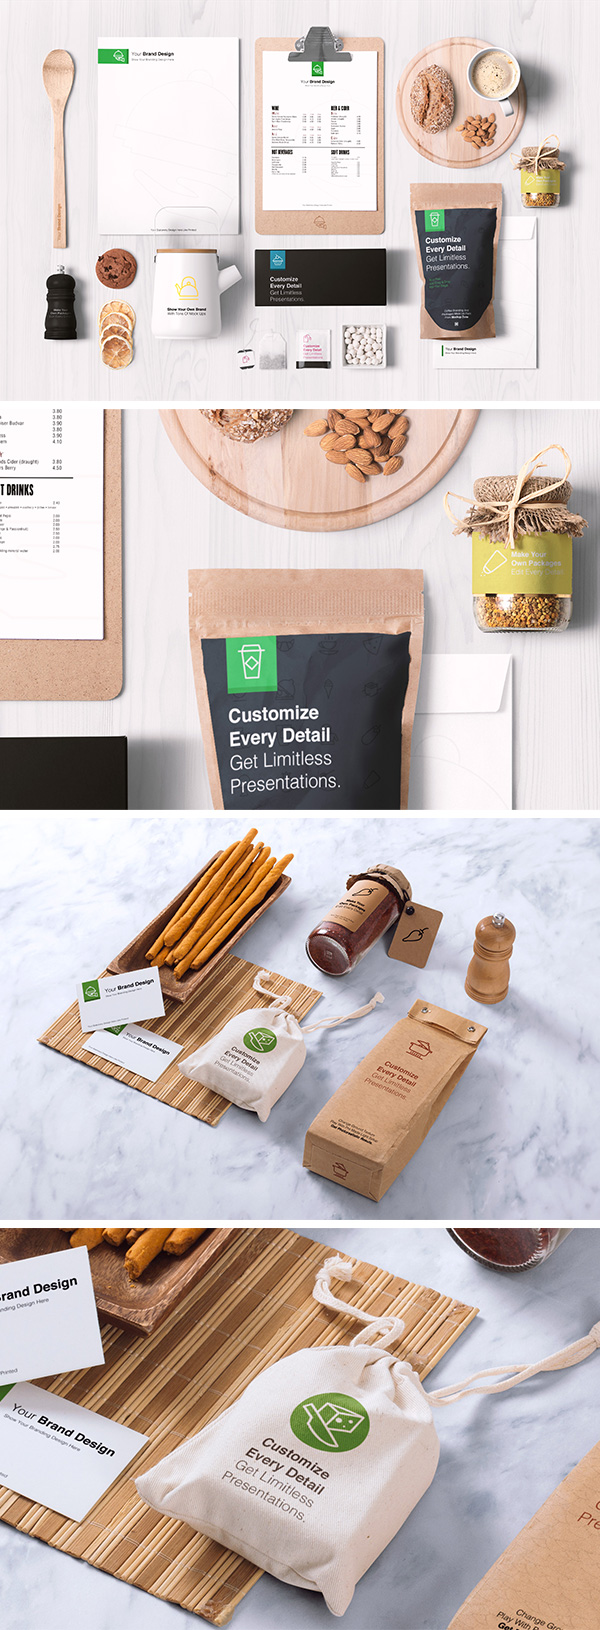 Download 2 Food Branding And Eco Packaging Mockups Package Mockups